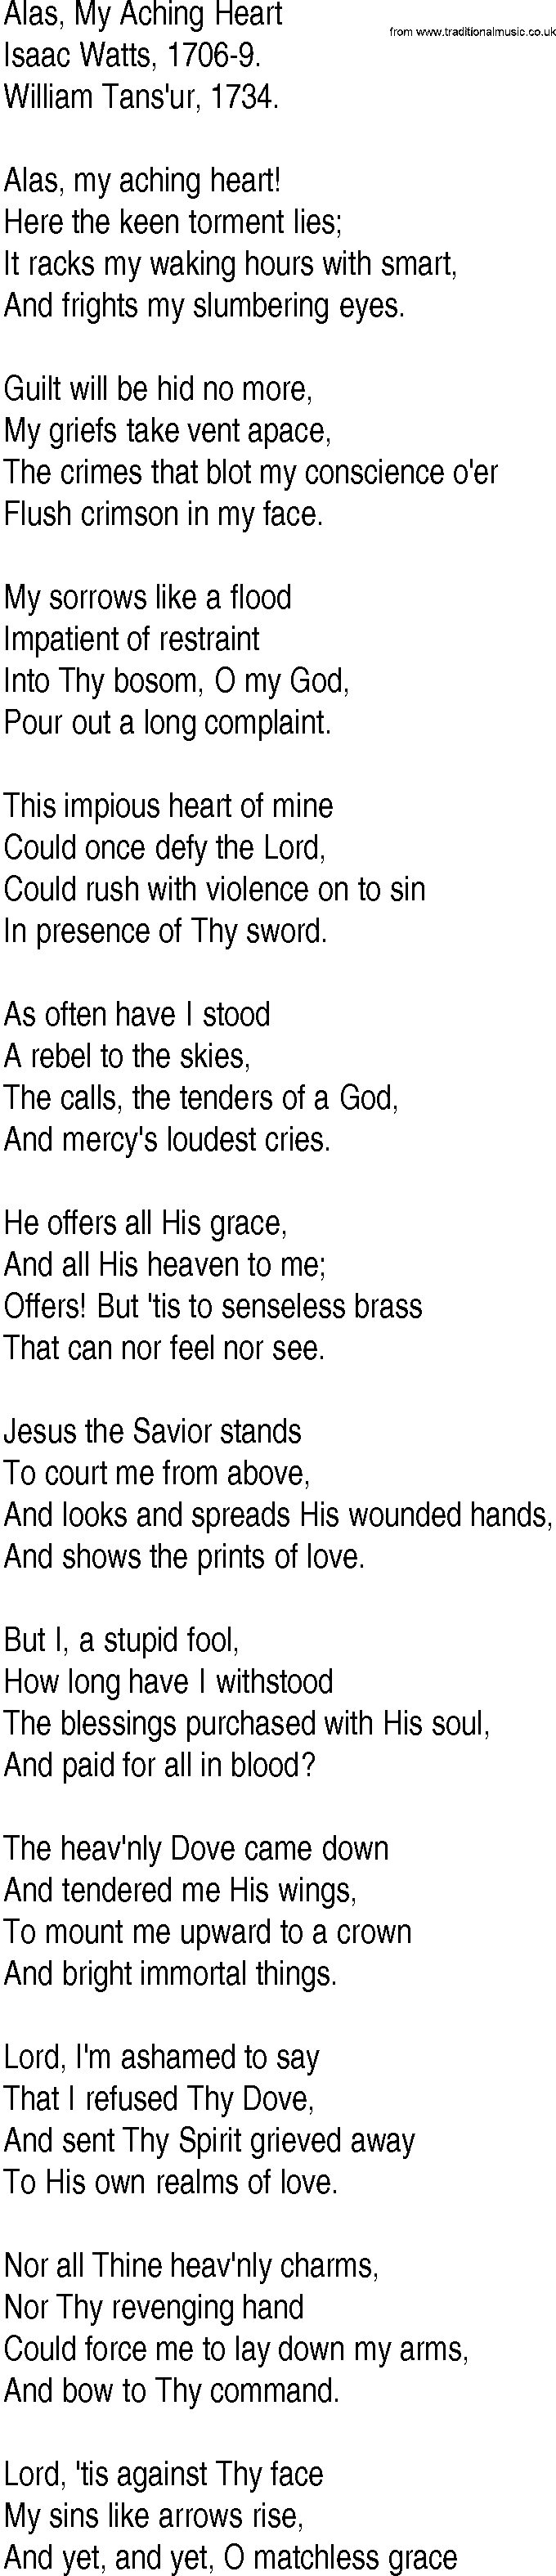 Hymn and Gospel Song: Alas, My Aching Heart by Isaac Watts lyrics